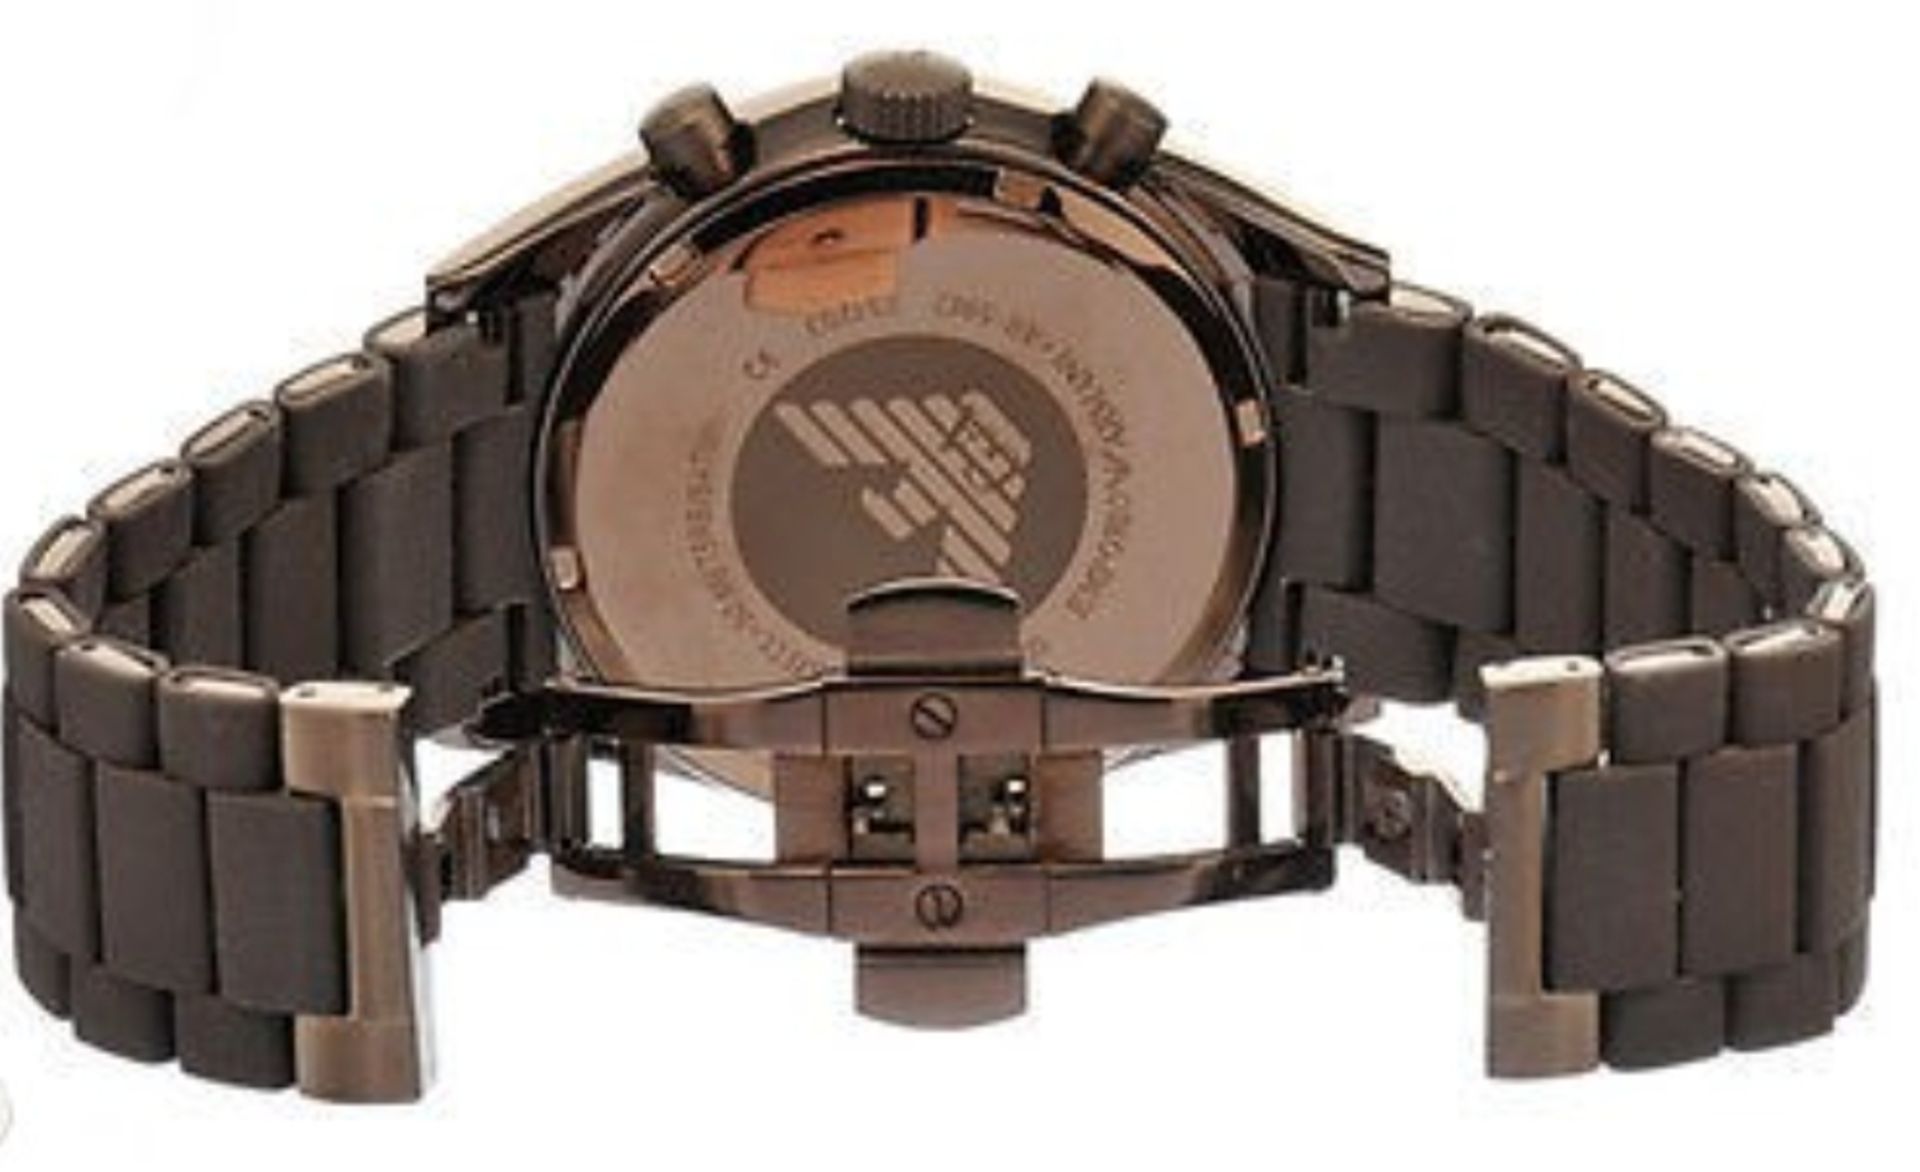 Emporio Armani AR5982 Men's Sportivo Brown Dial Quartz Chronograph Watch - Image 5 of 7